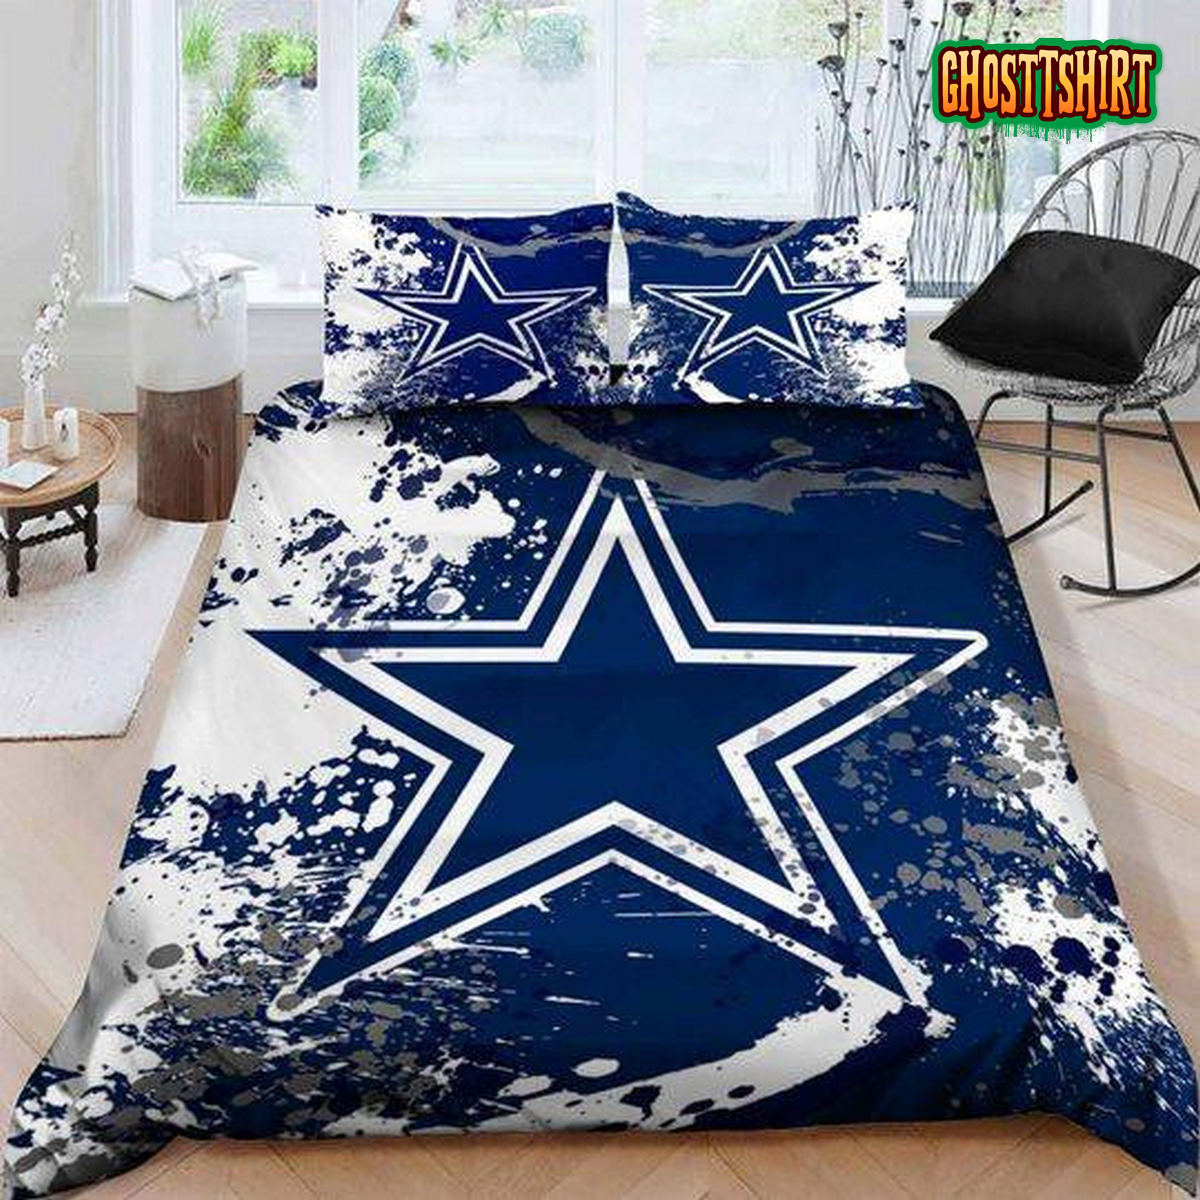 Dallas Cowboys Bedding Set B1809104